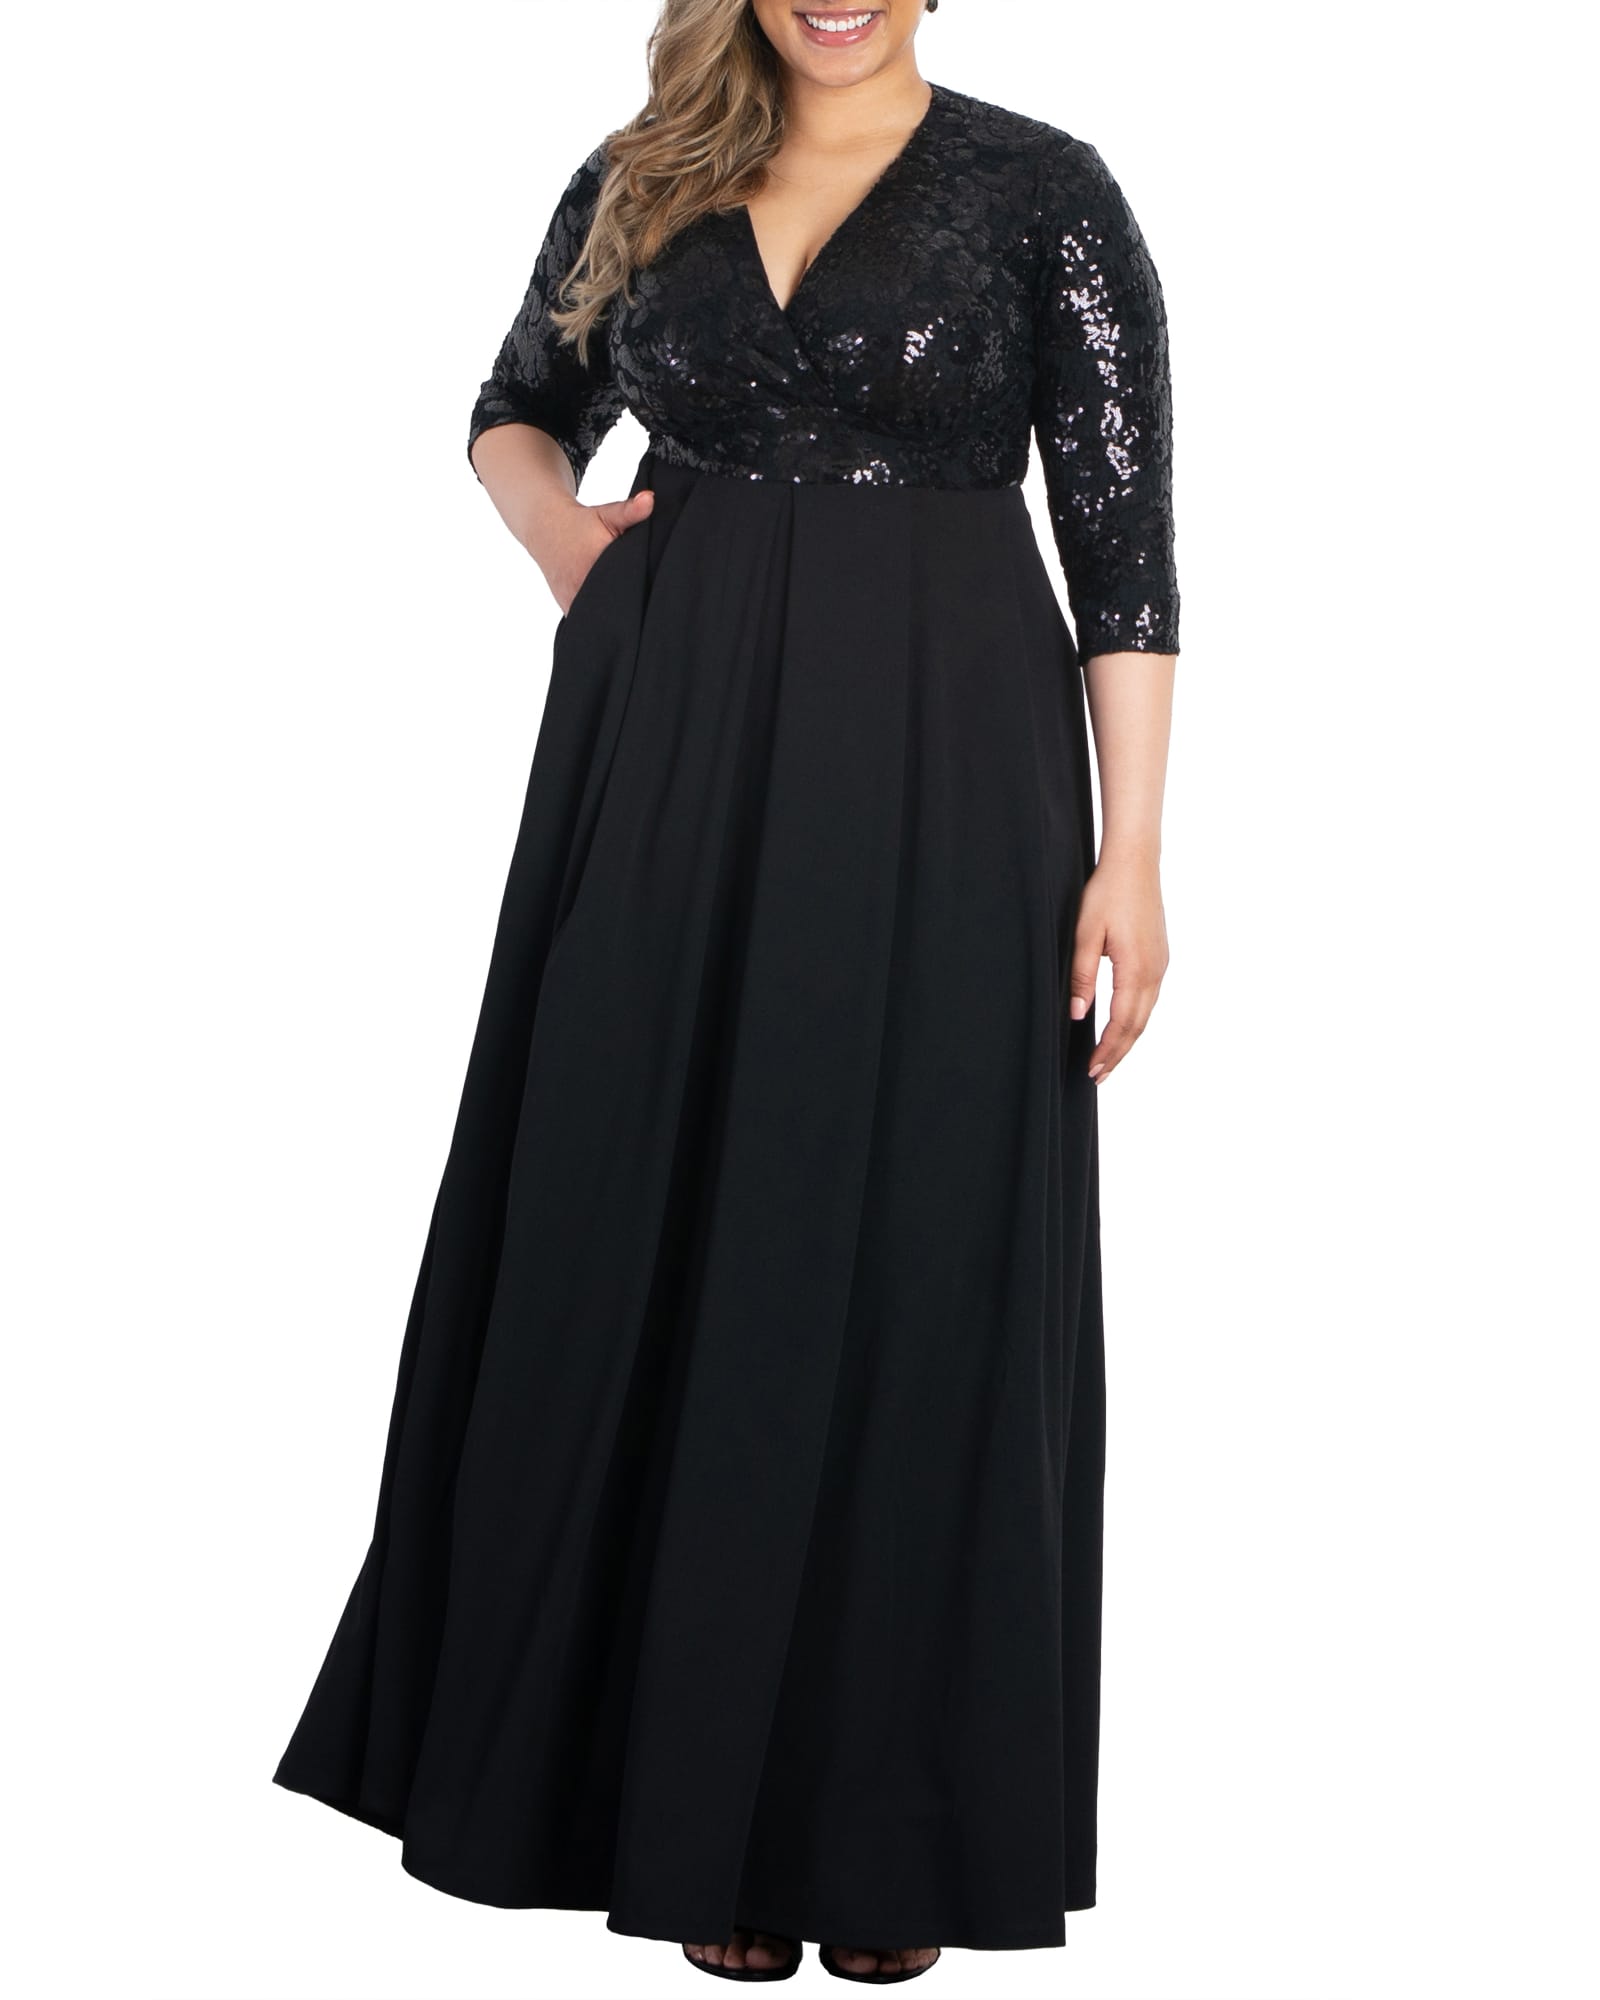 Sexy Sequin Dress - Black Sequin Dress - Shiny Bodycon Dress - Lulus